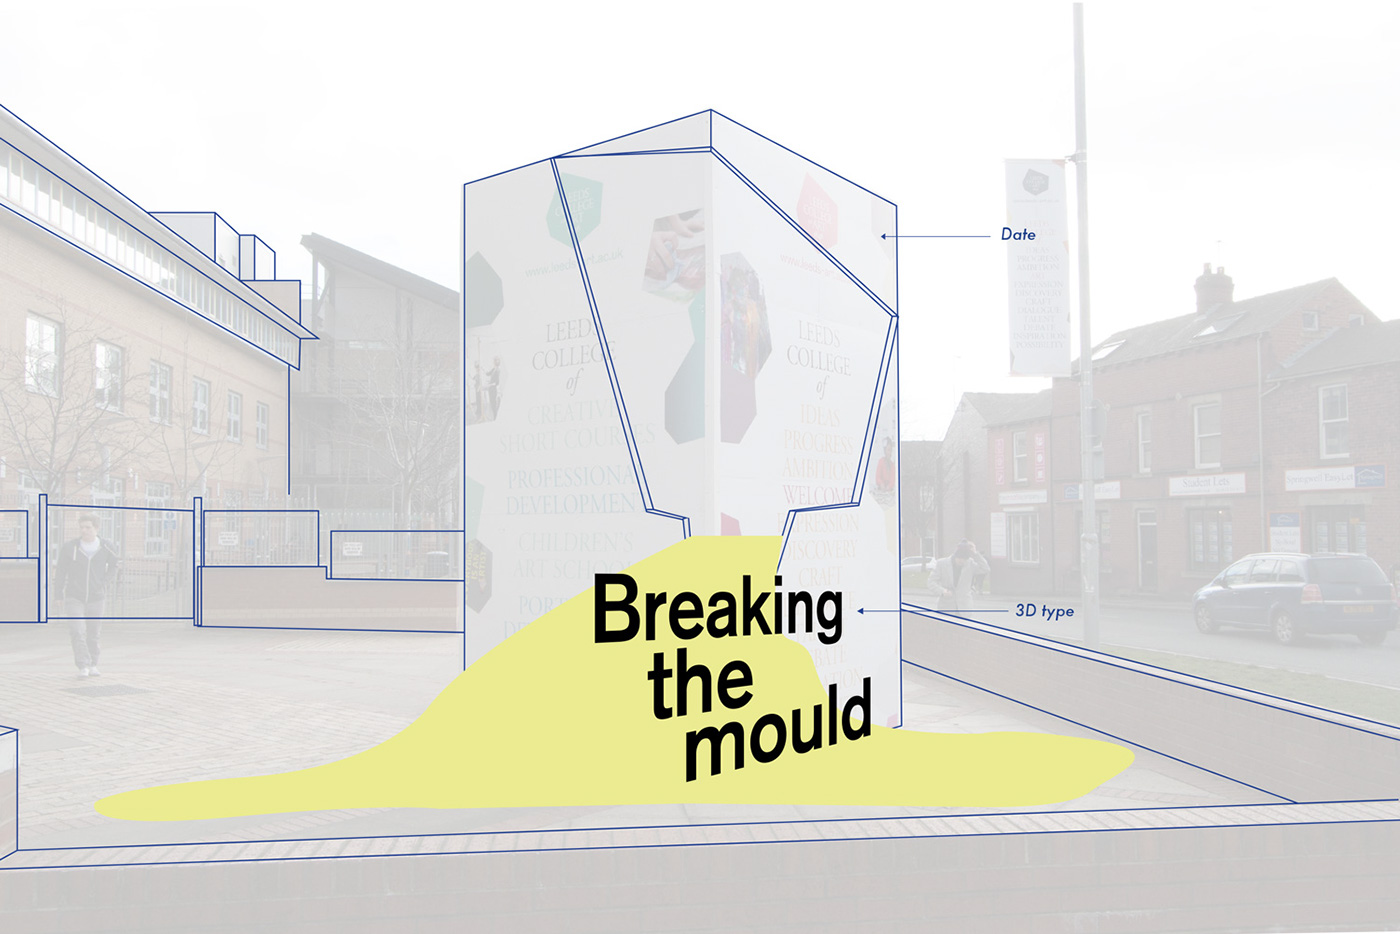 Exhibition  brand plaster LCA degree show Proposal University art school smashing Make Or Break BREAKING THE MOULD